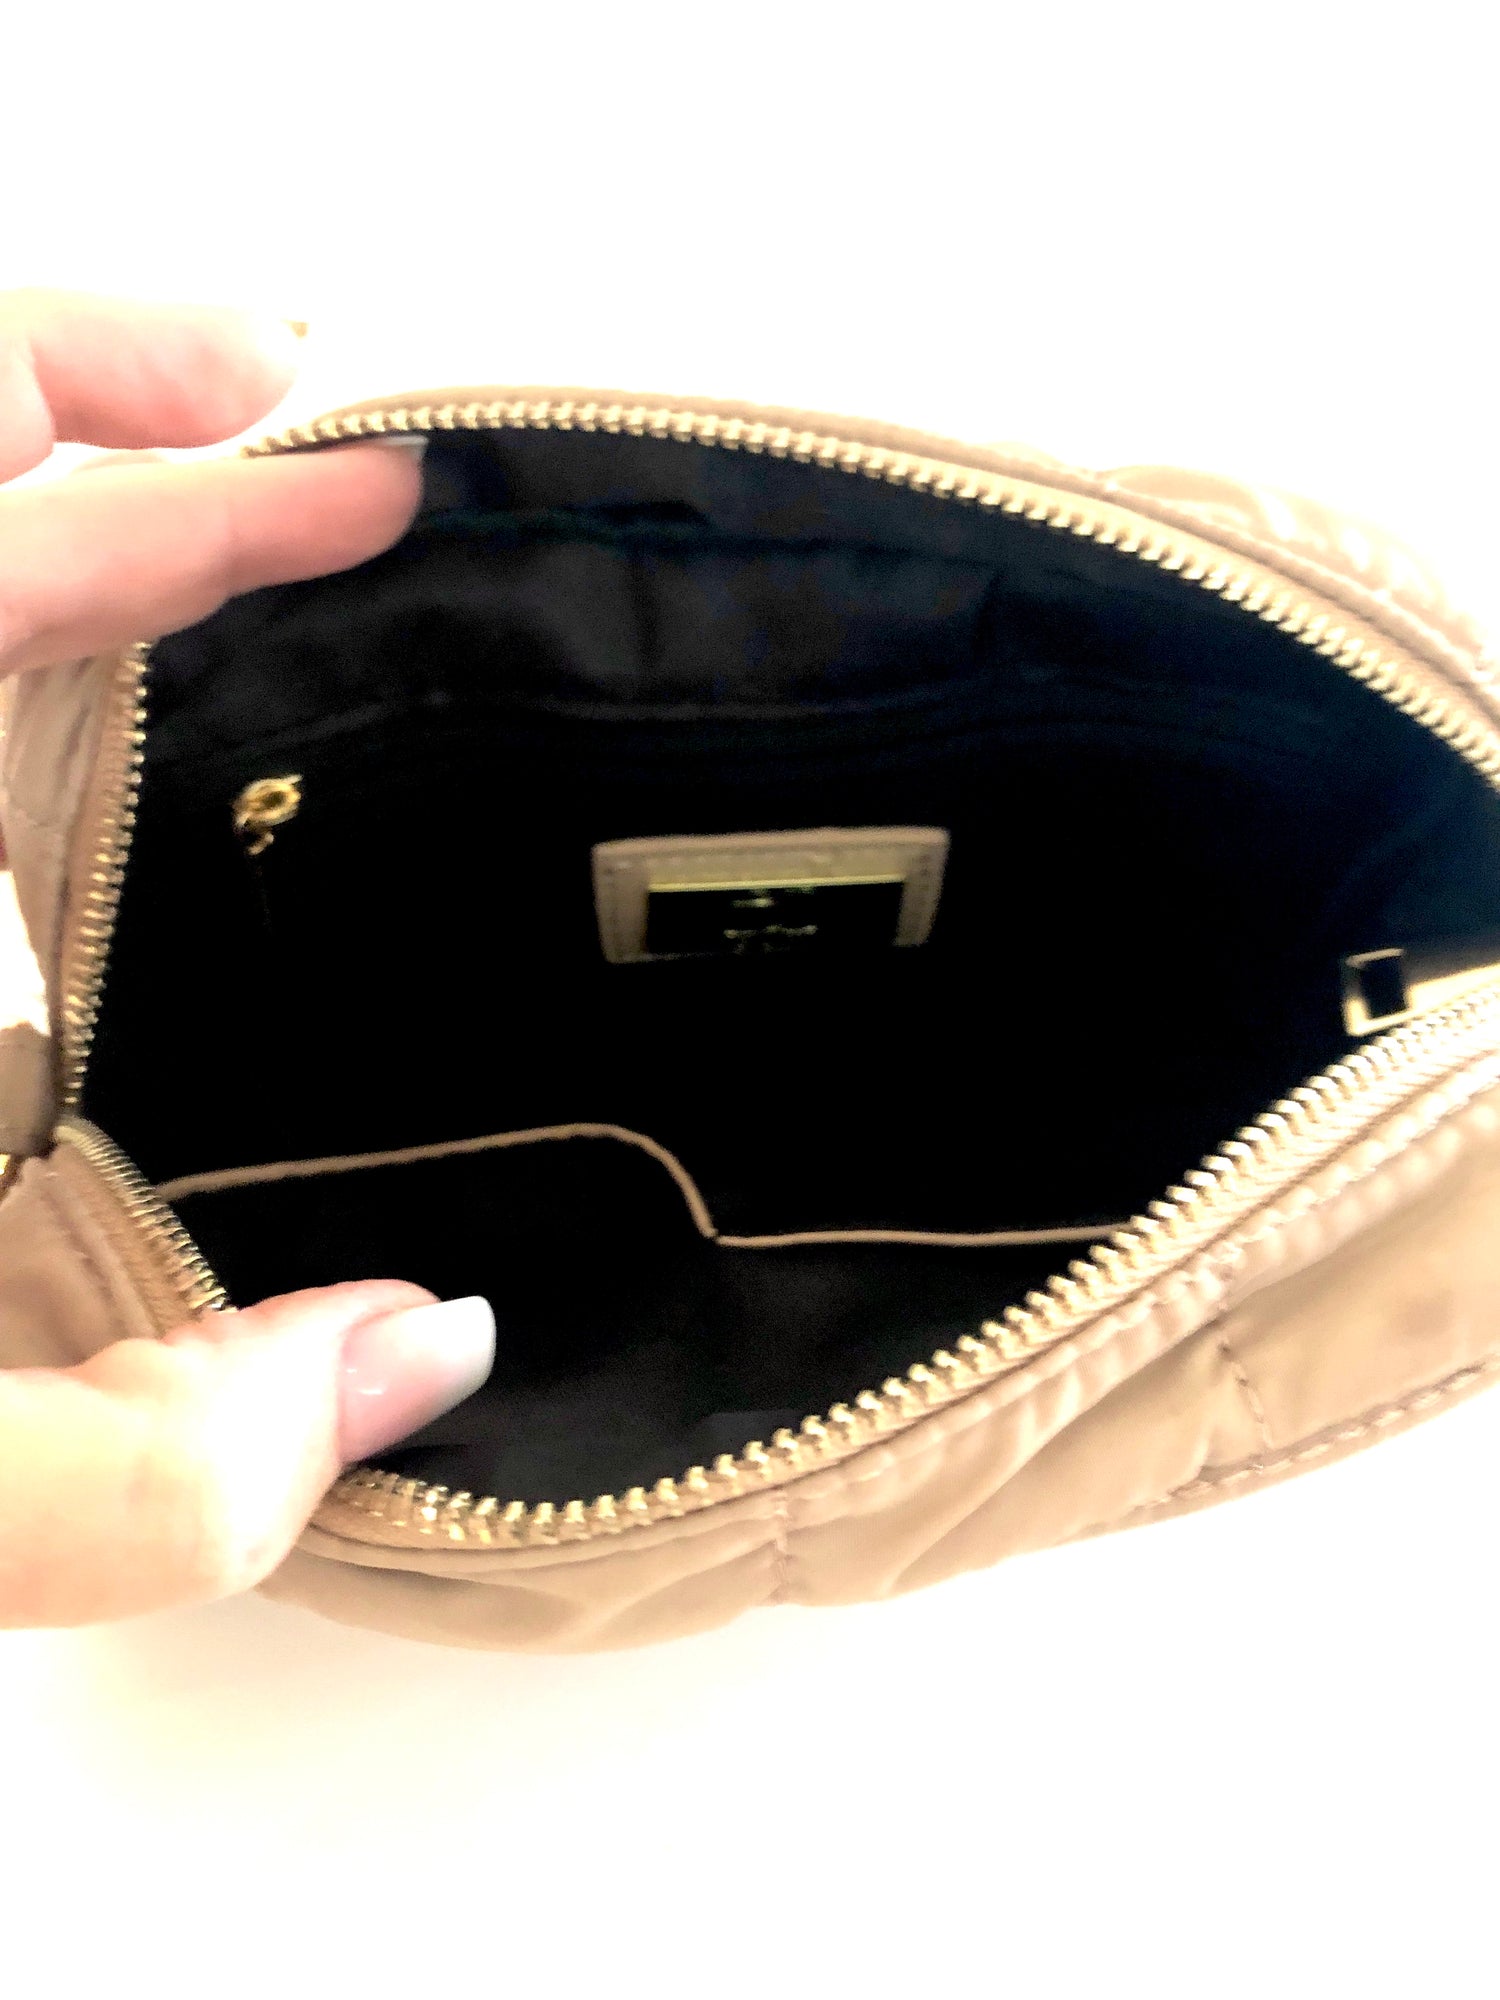 black purse inside